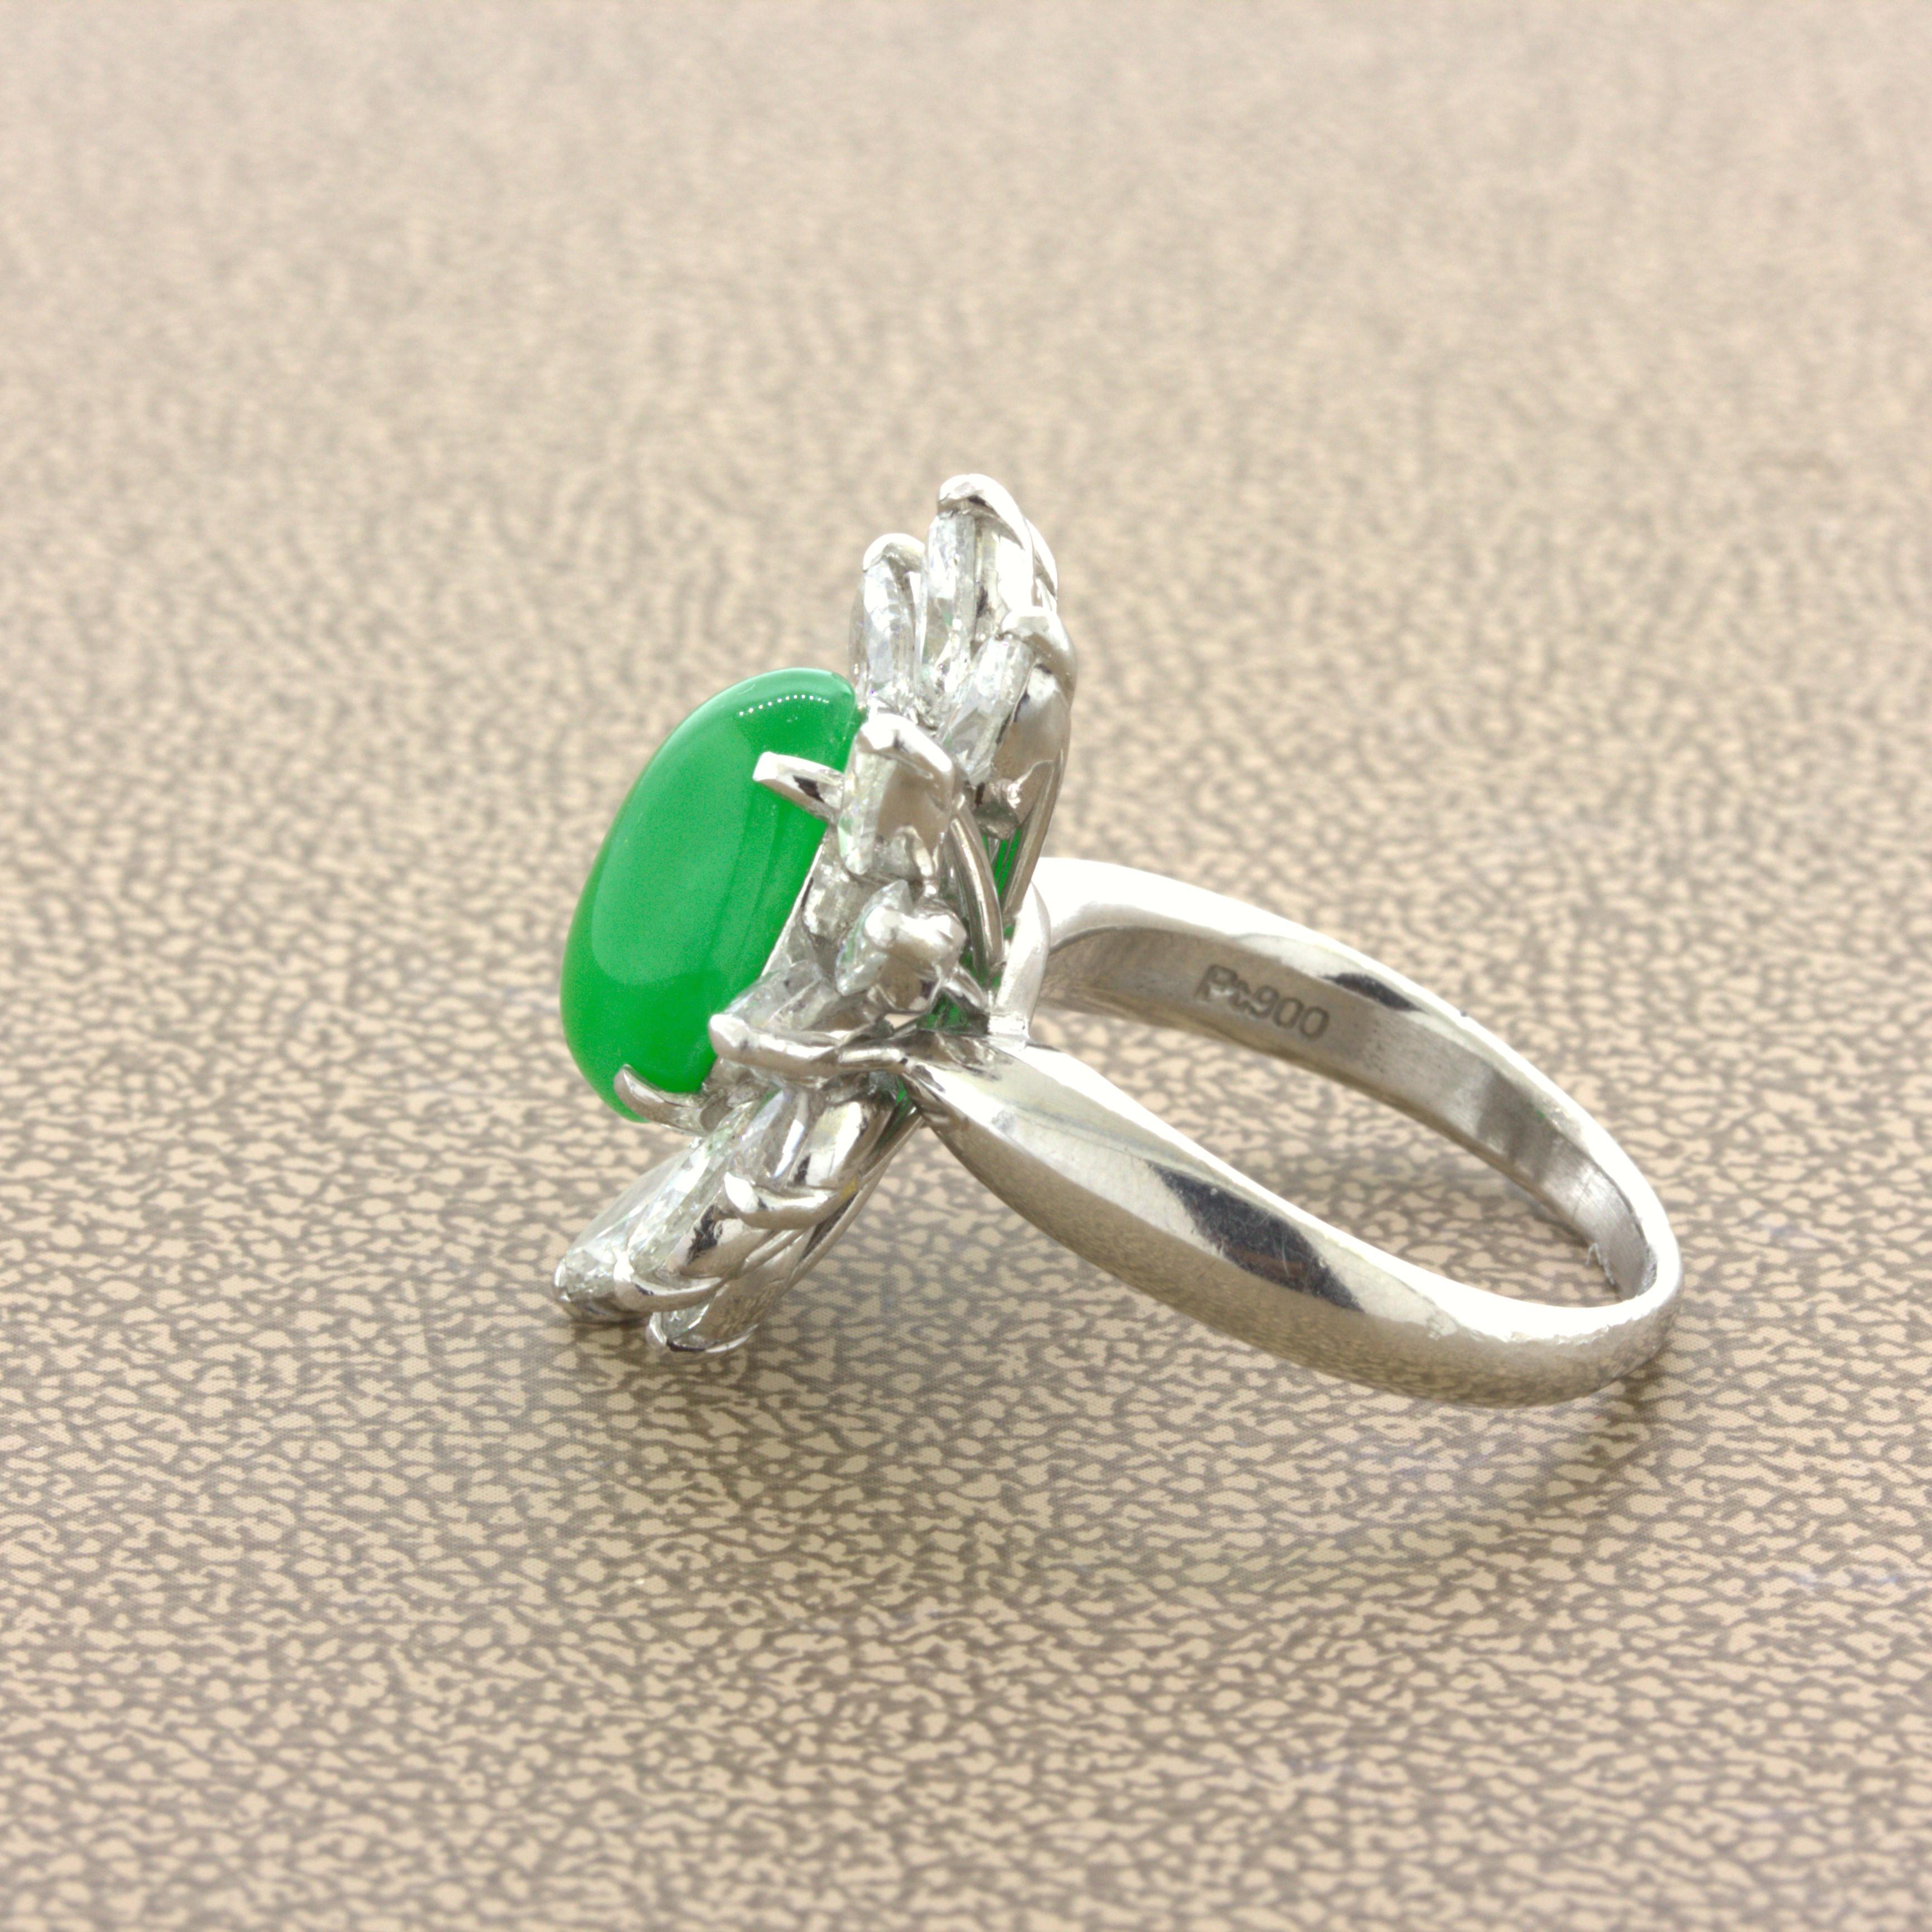 4.13 Carat Jadeite Jade Diamond Sunburst Platinum Ring, GIA Certified “Type A” For Sale 1